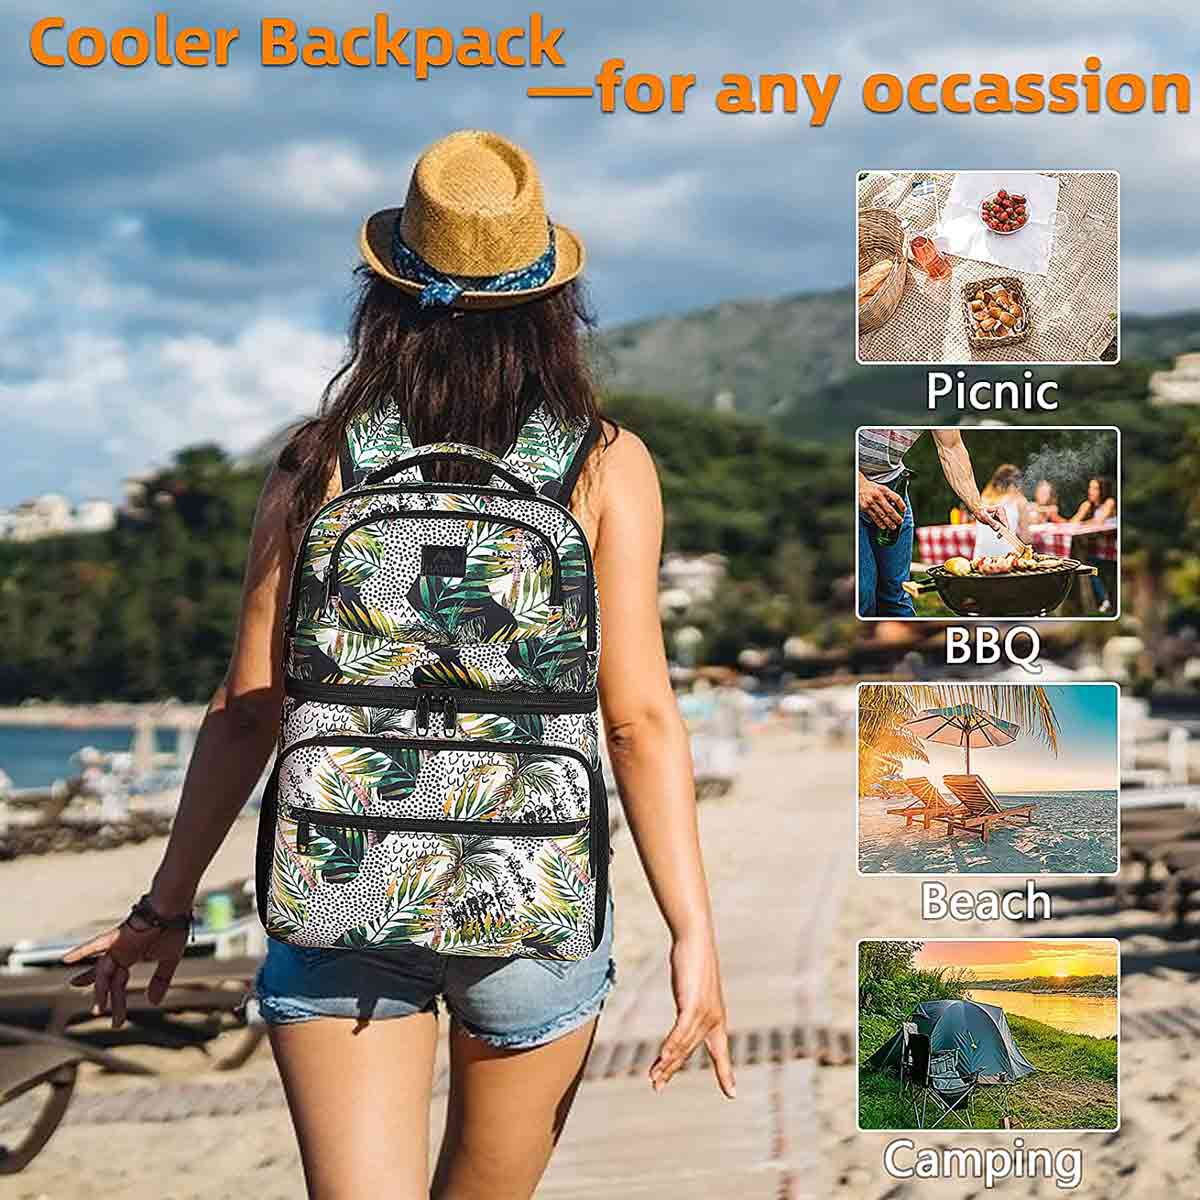 Matein Soft Cooler Backpack - Matein